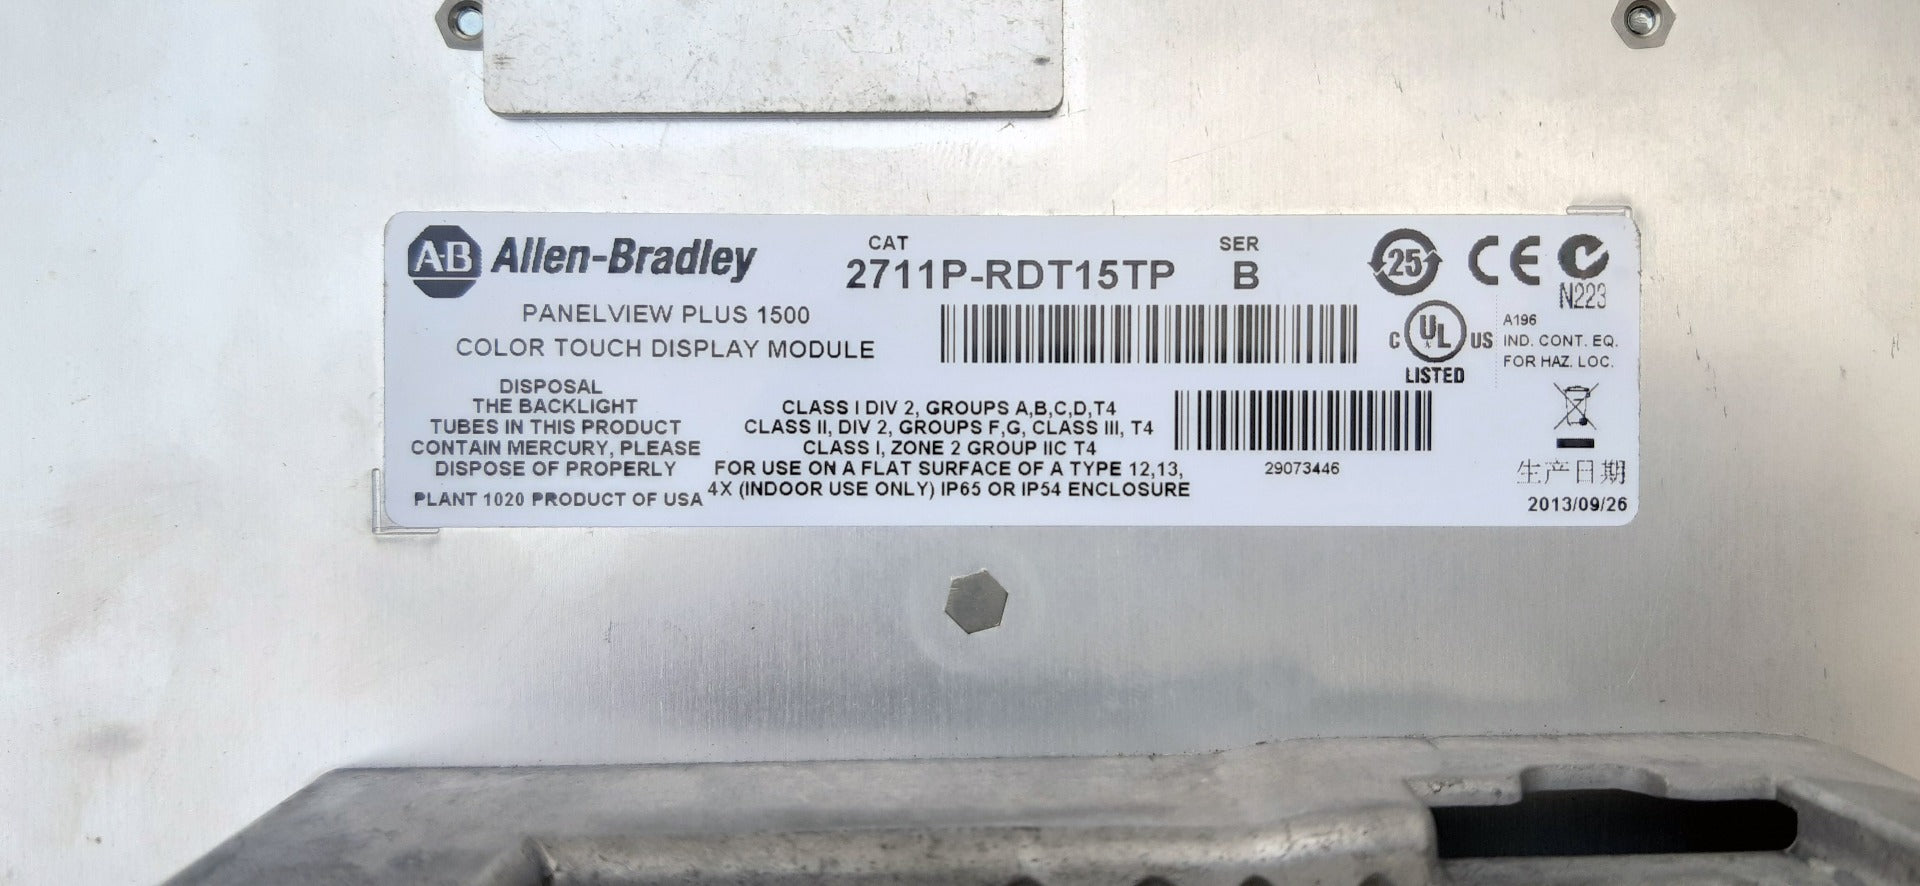 Allen-bradley 2711p-rdt15tp color touch display module ser B